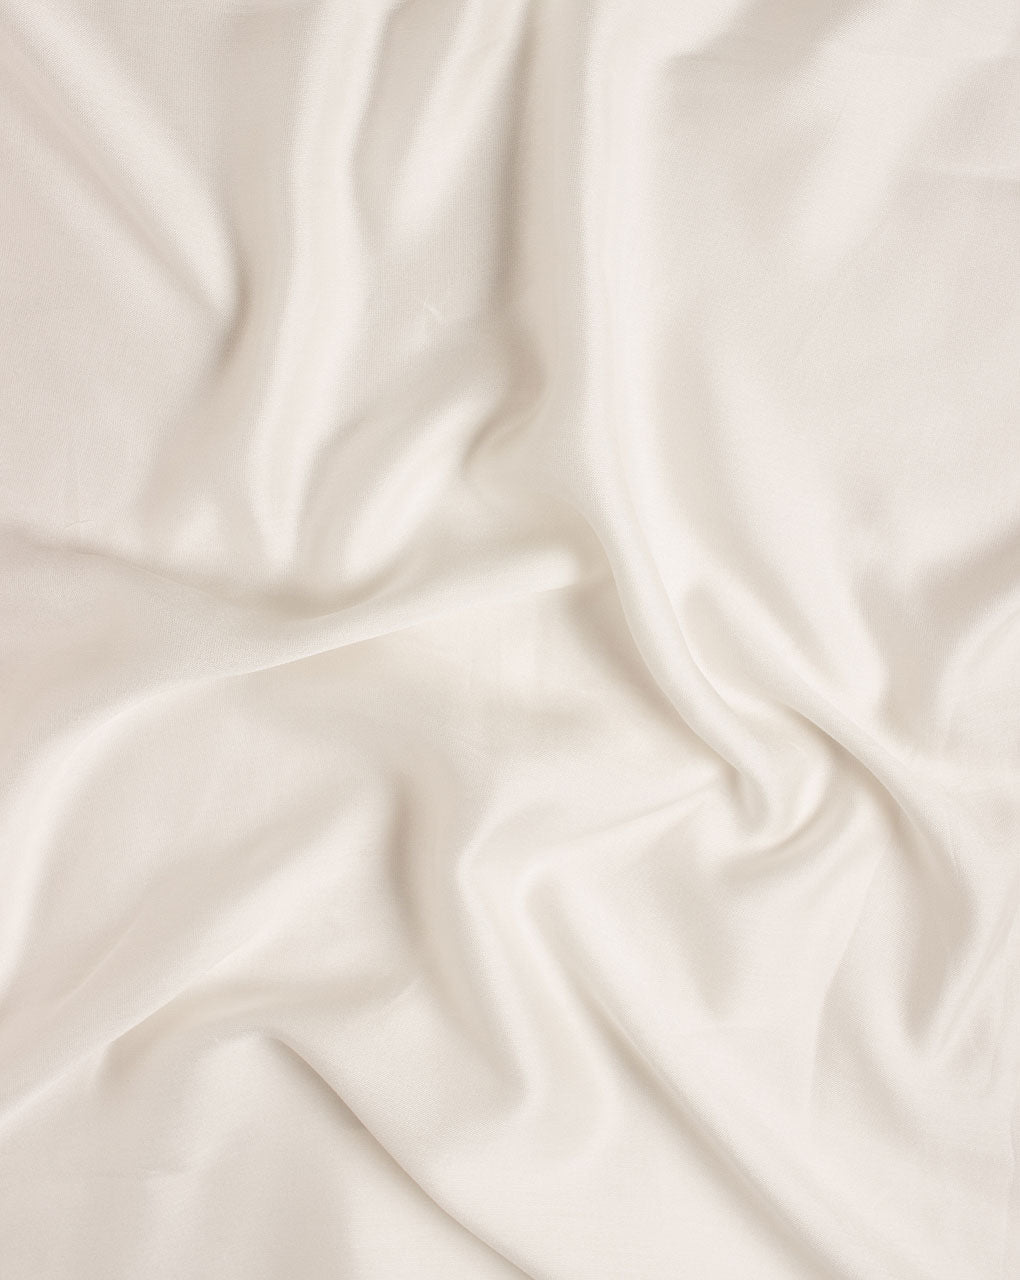 Dyeable Liva Bemberg Modal ( Gaji Silk )Fabric - Fabriclore.com